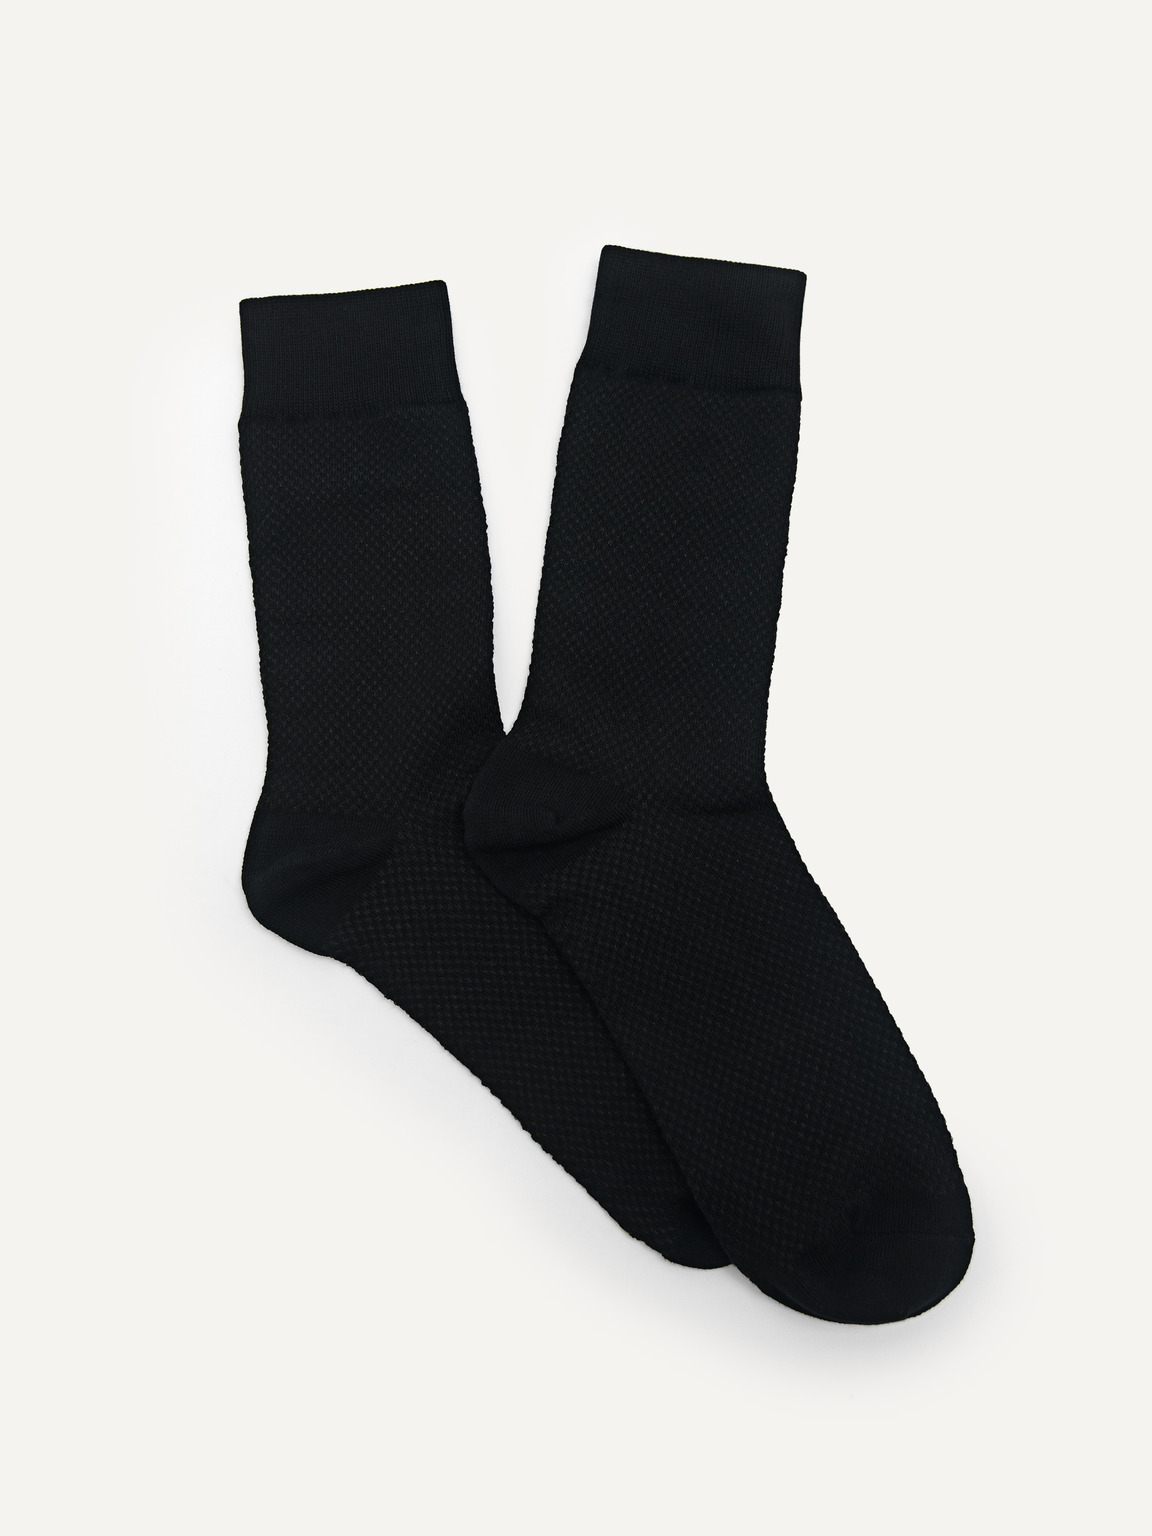 Men's Textured Cotton Socks, Black